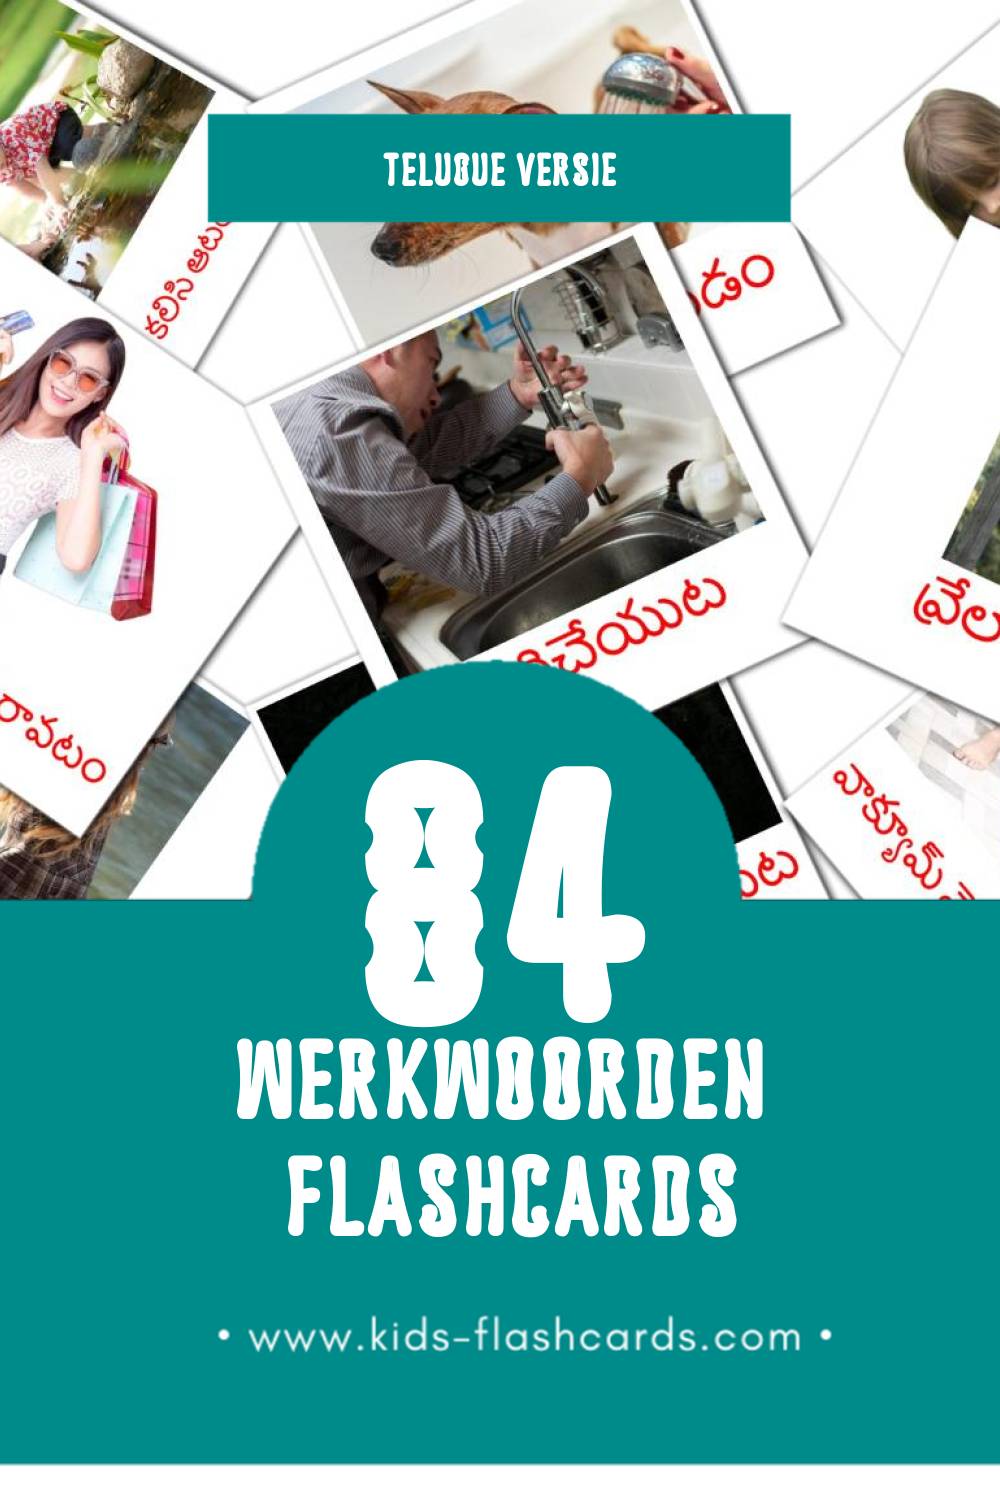 Visuele క్రియలు  Flashcards voor Kleuters (84 kaarten in het Telugu)